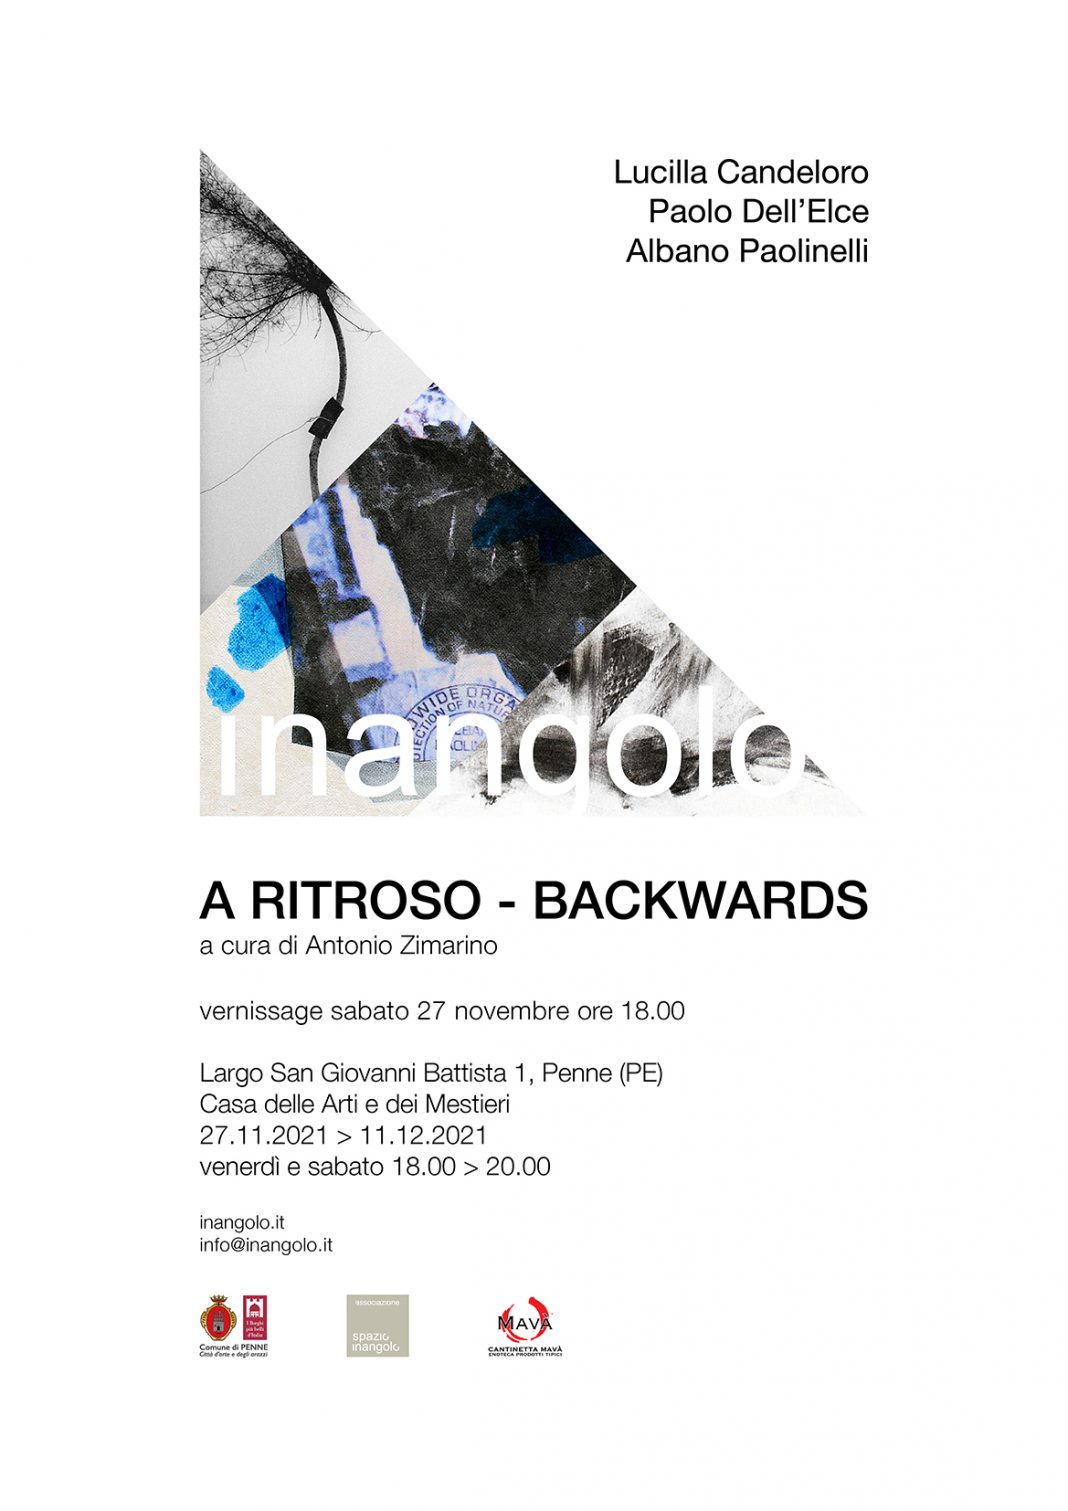 A RITROSO – BACKWARDShttps://www.exibart.com/repository/media/formidable/11/img/5d4/LOCANDINA-a-ritroso-backwards-1068x1511.jpg